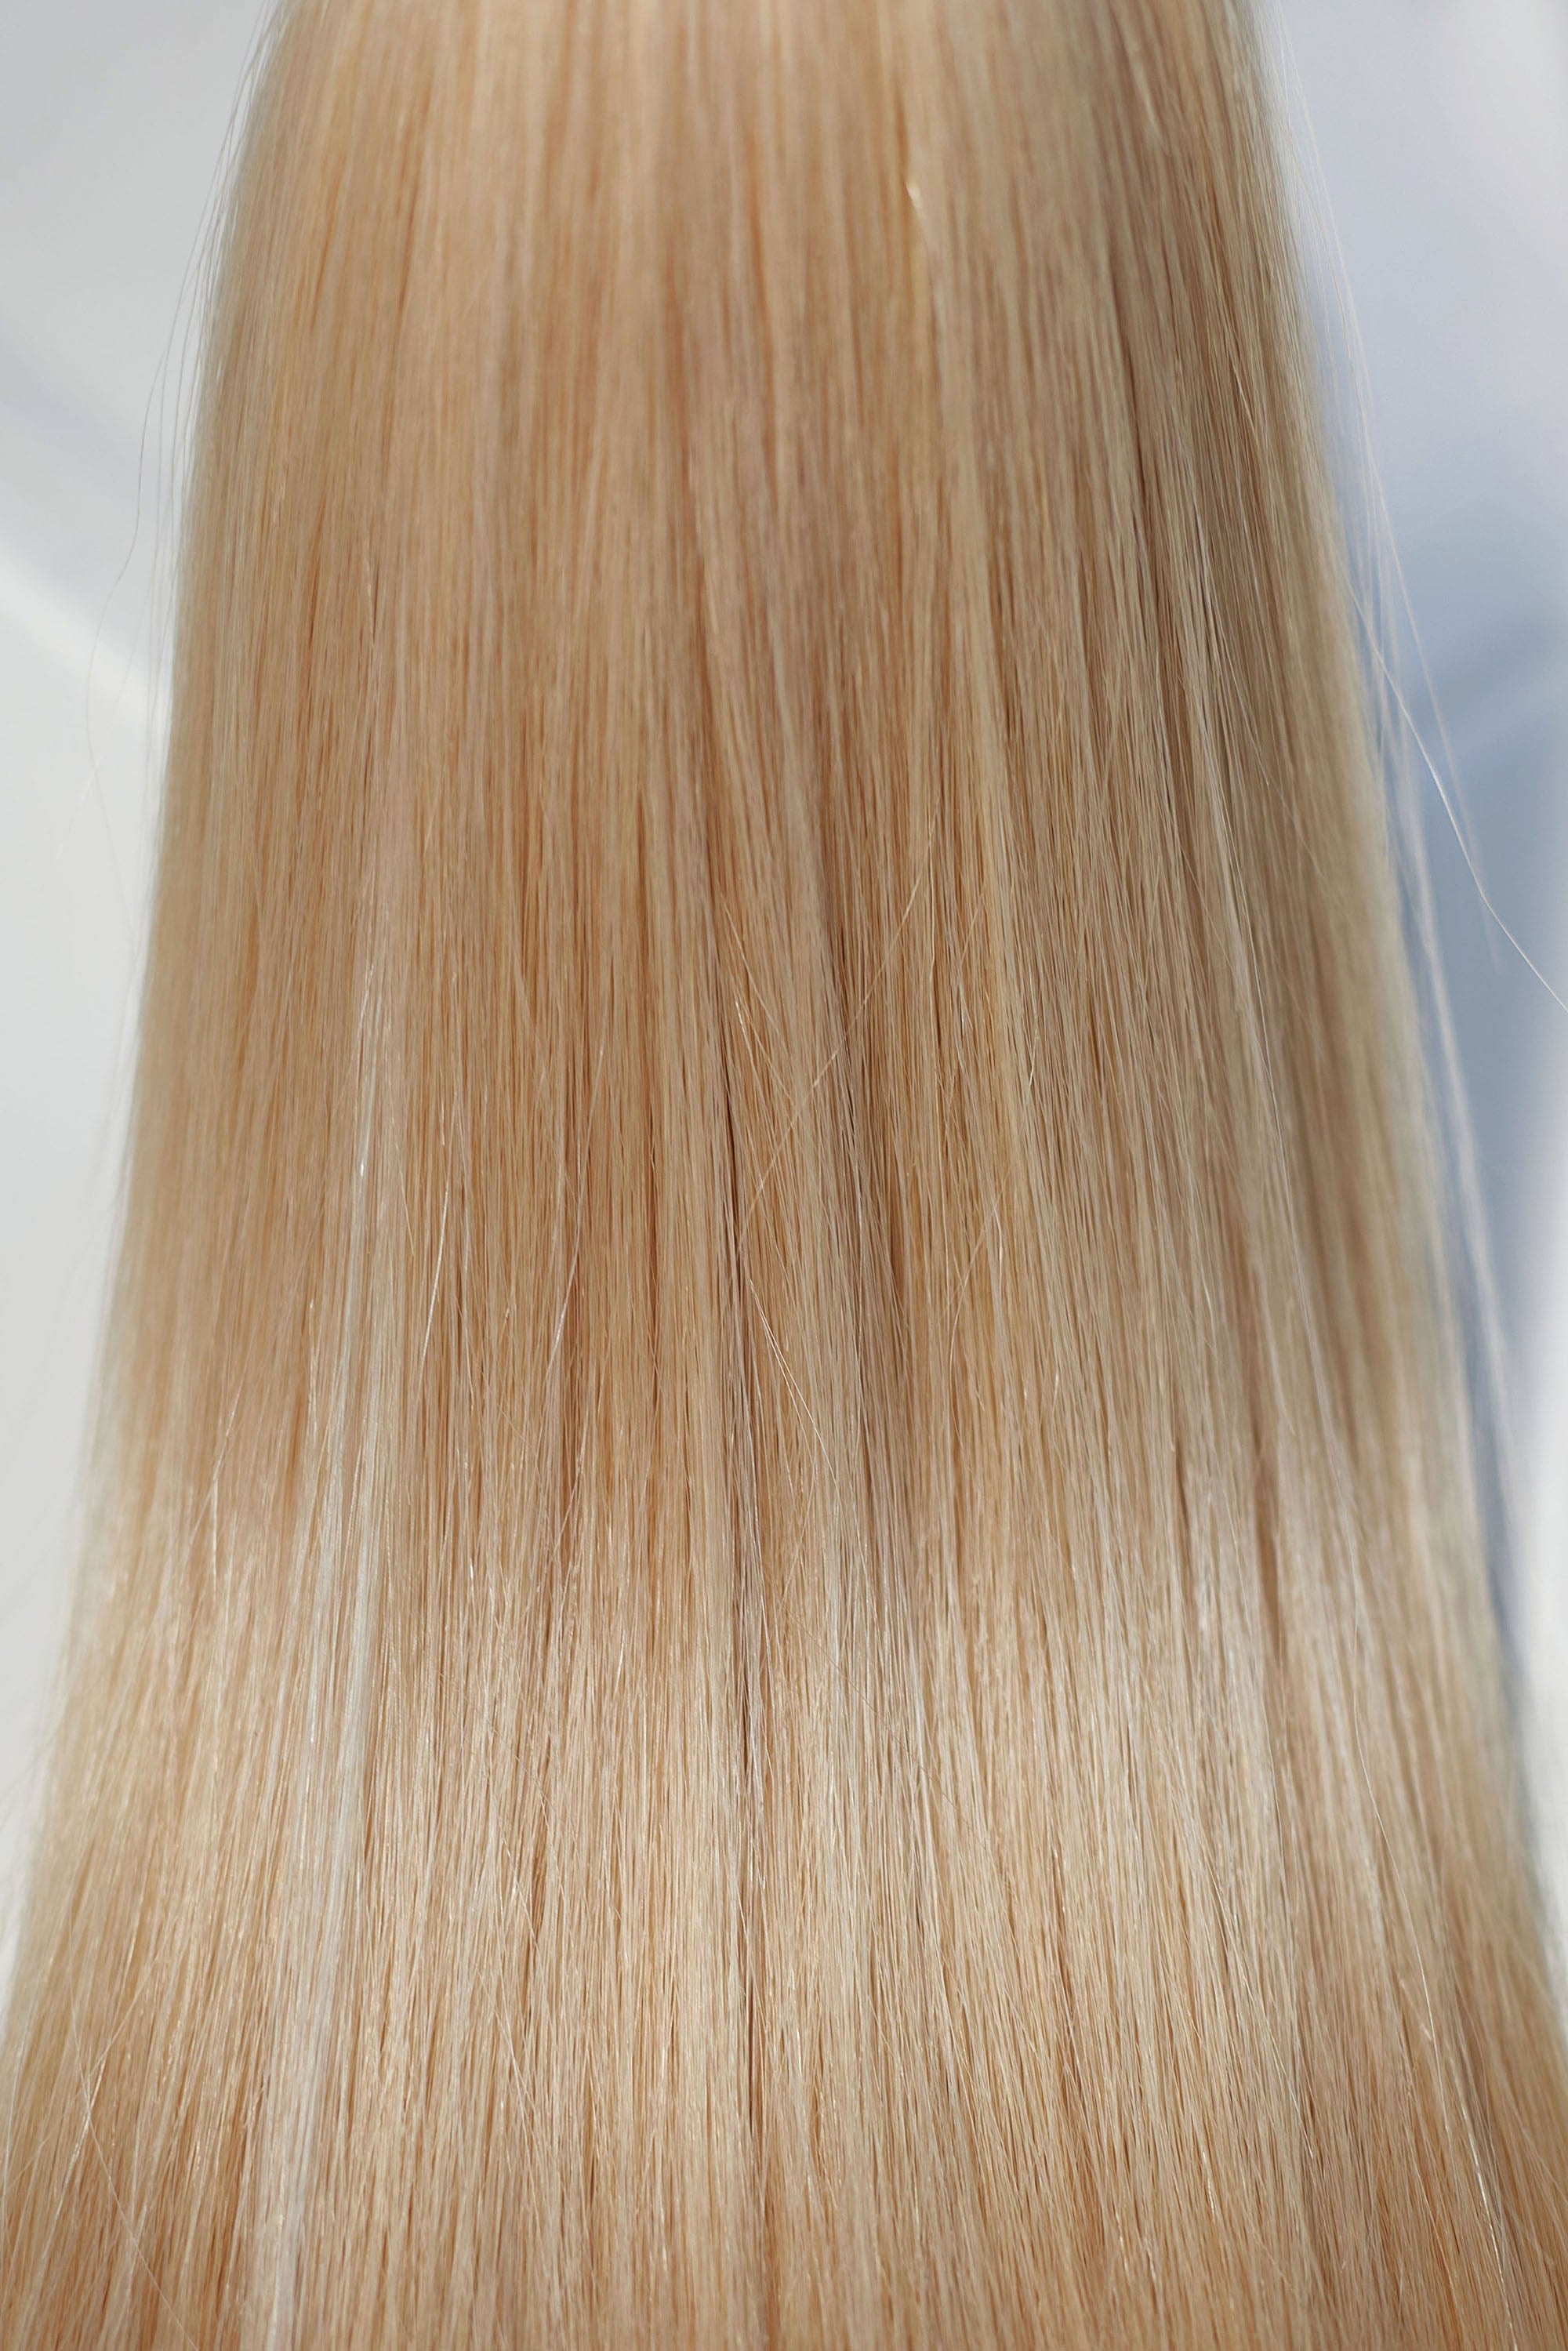 Behair professional Bulk hair "Premium" 26" (65cm) Natural Straight Light Gold Blond #24 - 25g hair extensions